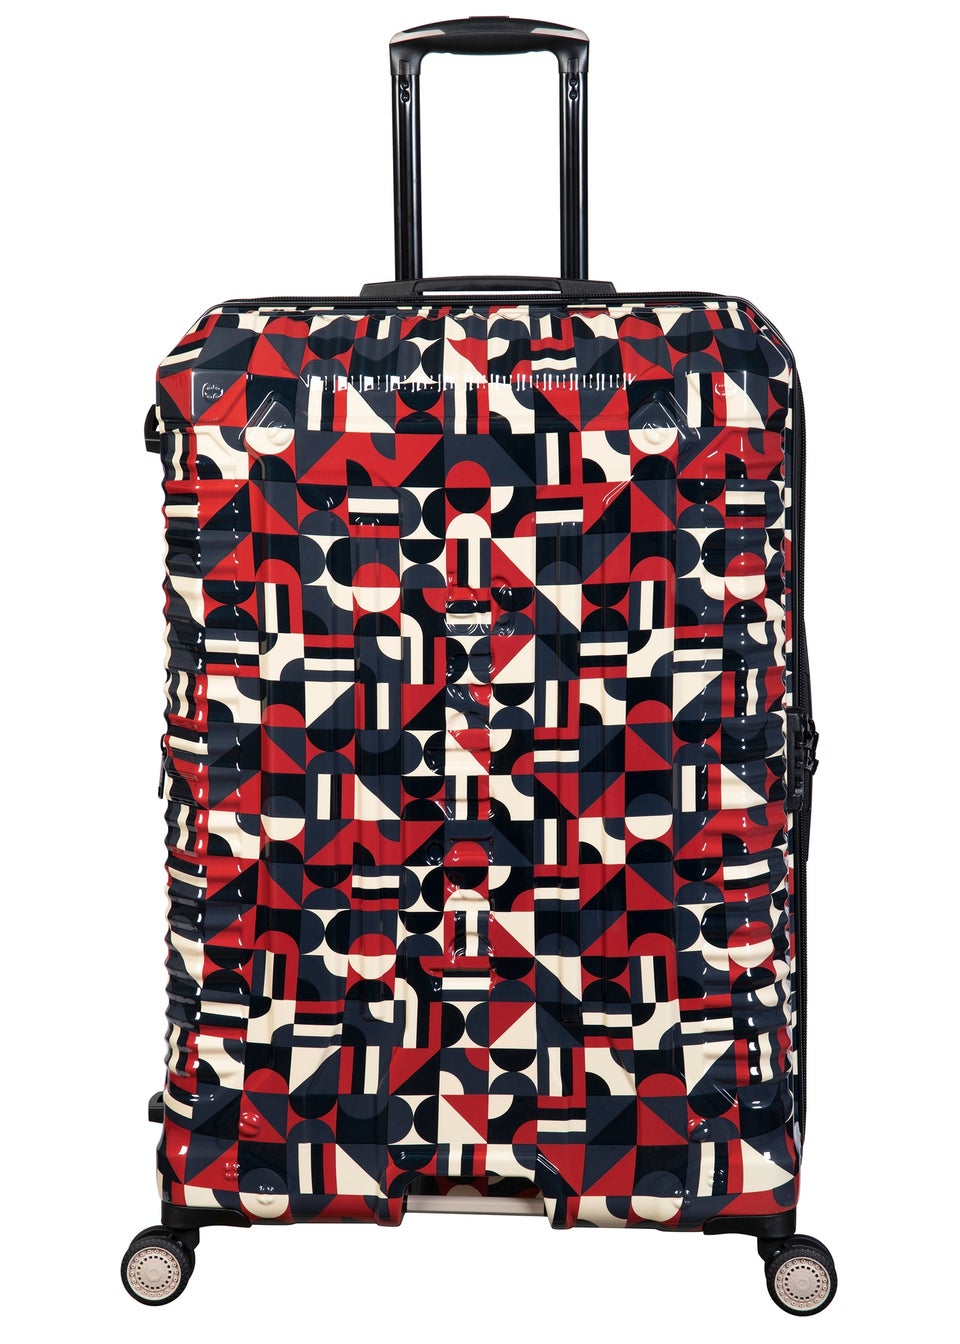 BritBag Annamite Skin Black/Red Geo Print Suitcase with TSA Lock